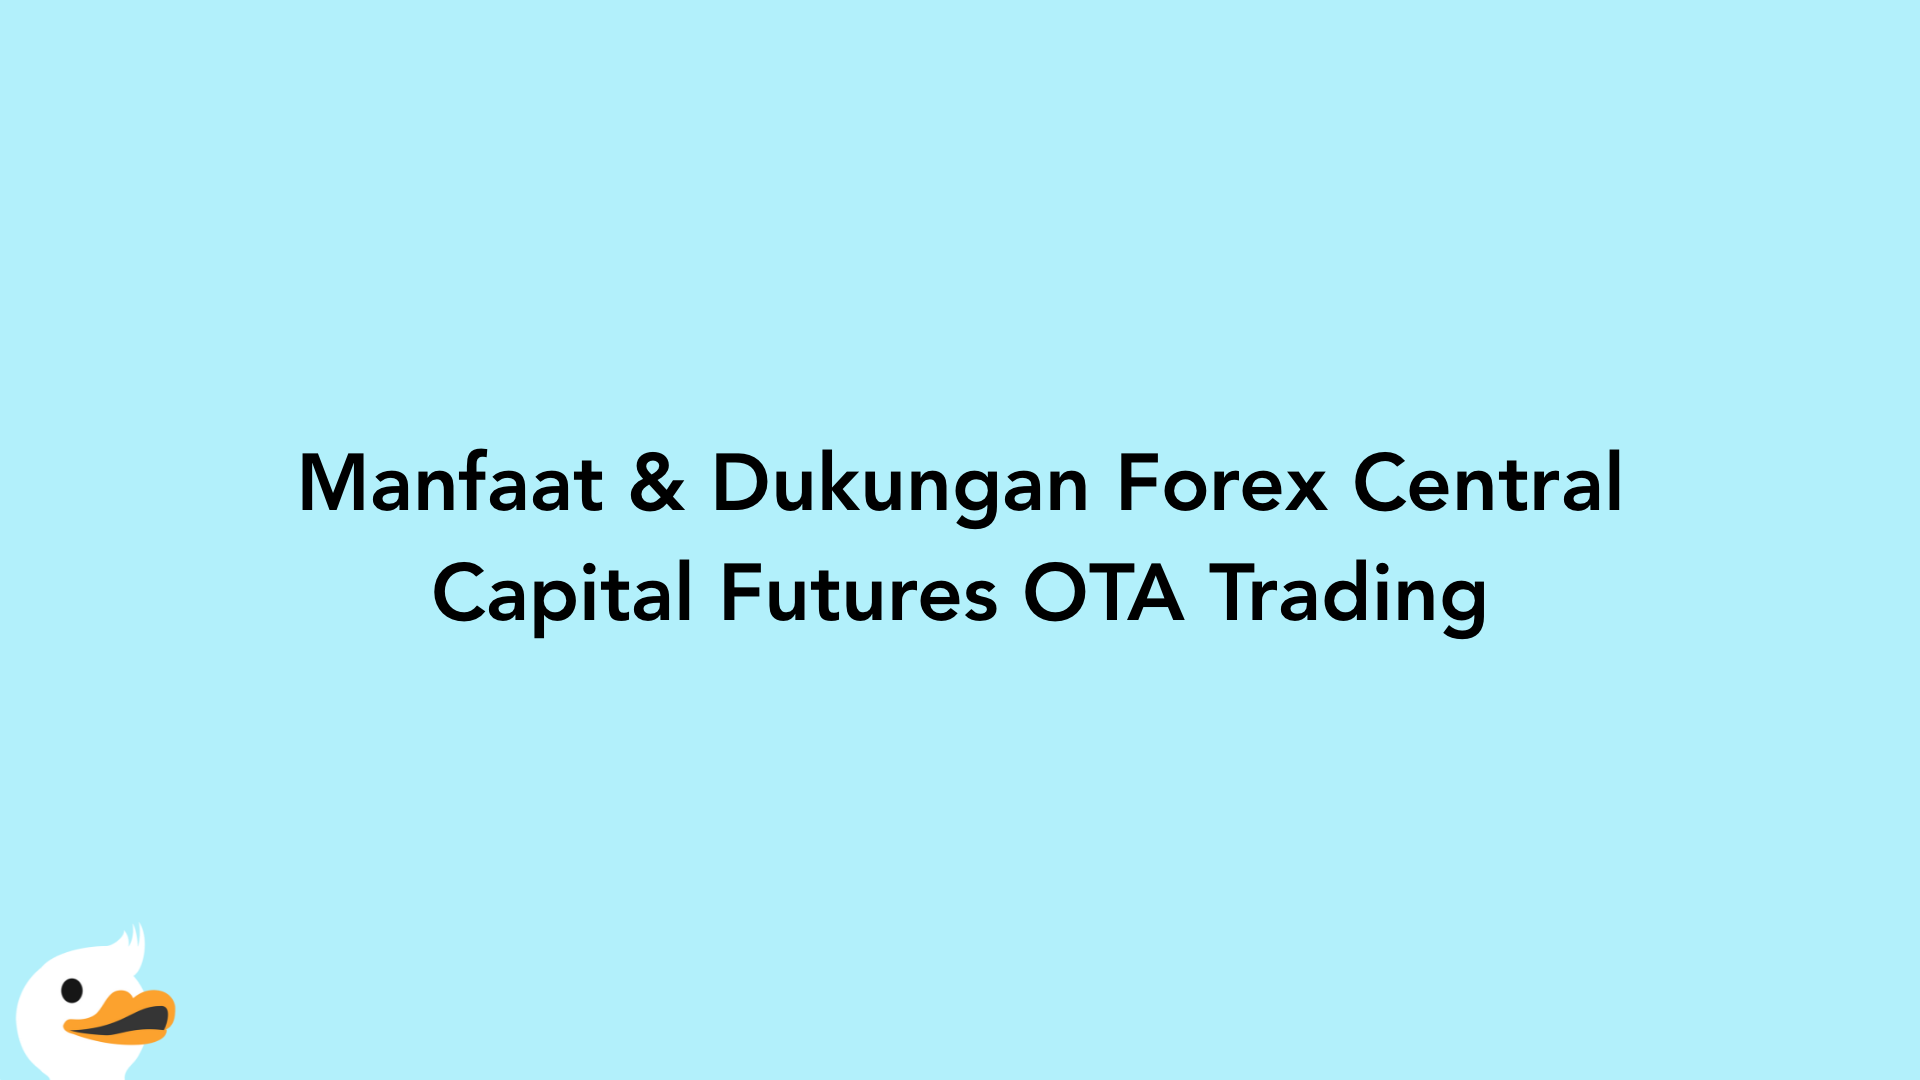 Manfaat & Dukungan Forex Central Capital Futures OTA Trading